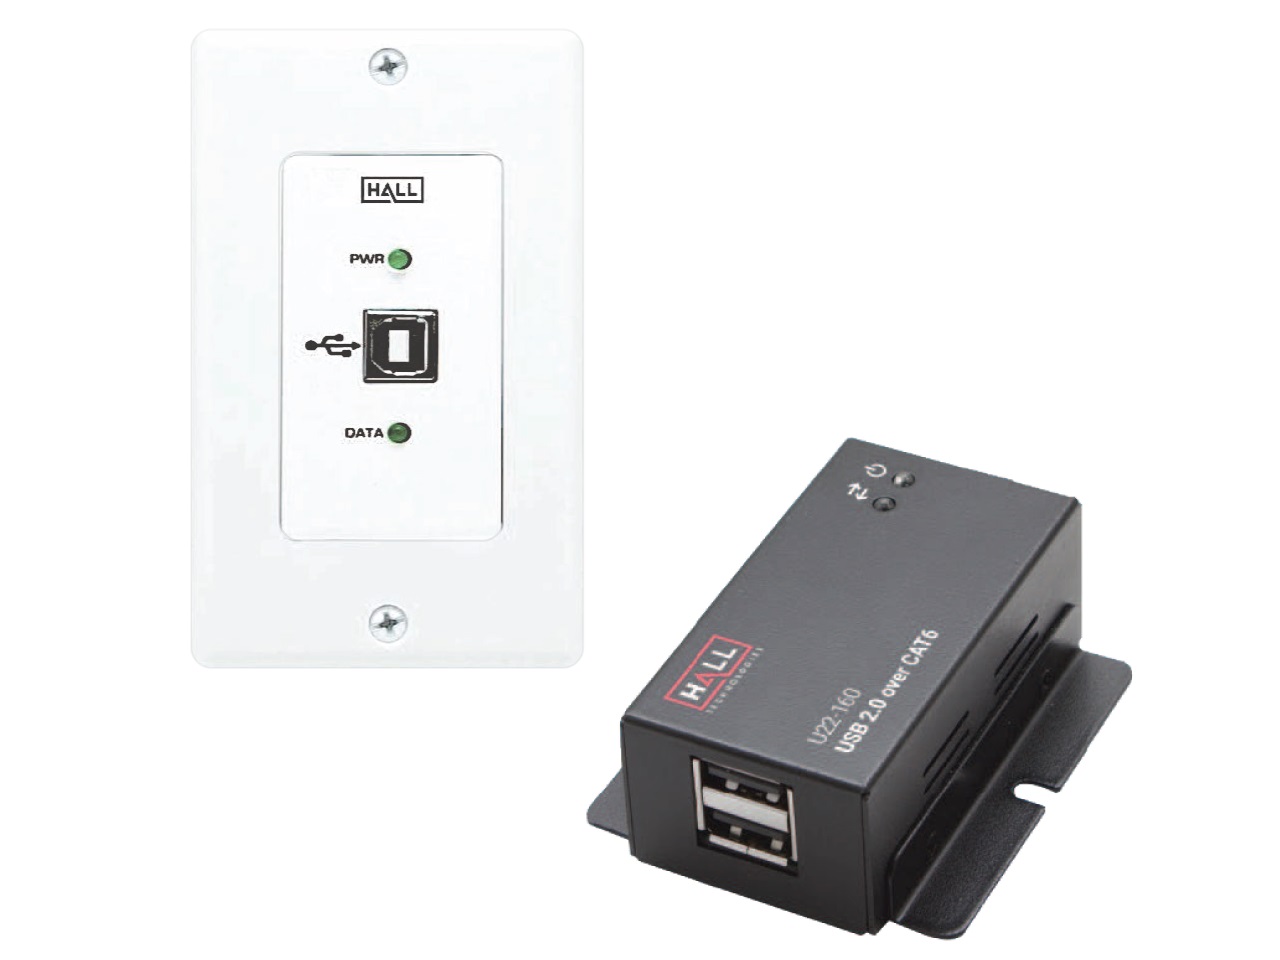 Hall Technologies U22-160-DP USB 2.0 over UTP Extender (Receiver/Transmitter) Kit Decora Wall Plate with 2-Port Hub